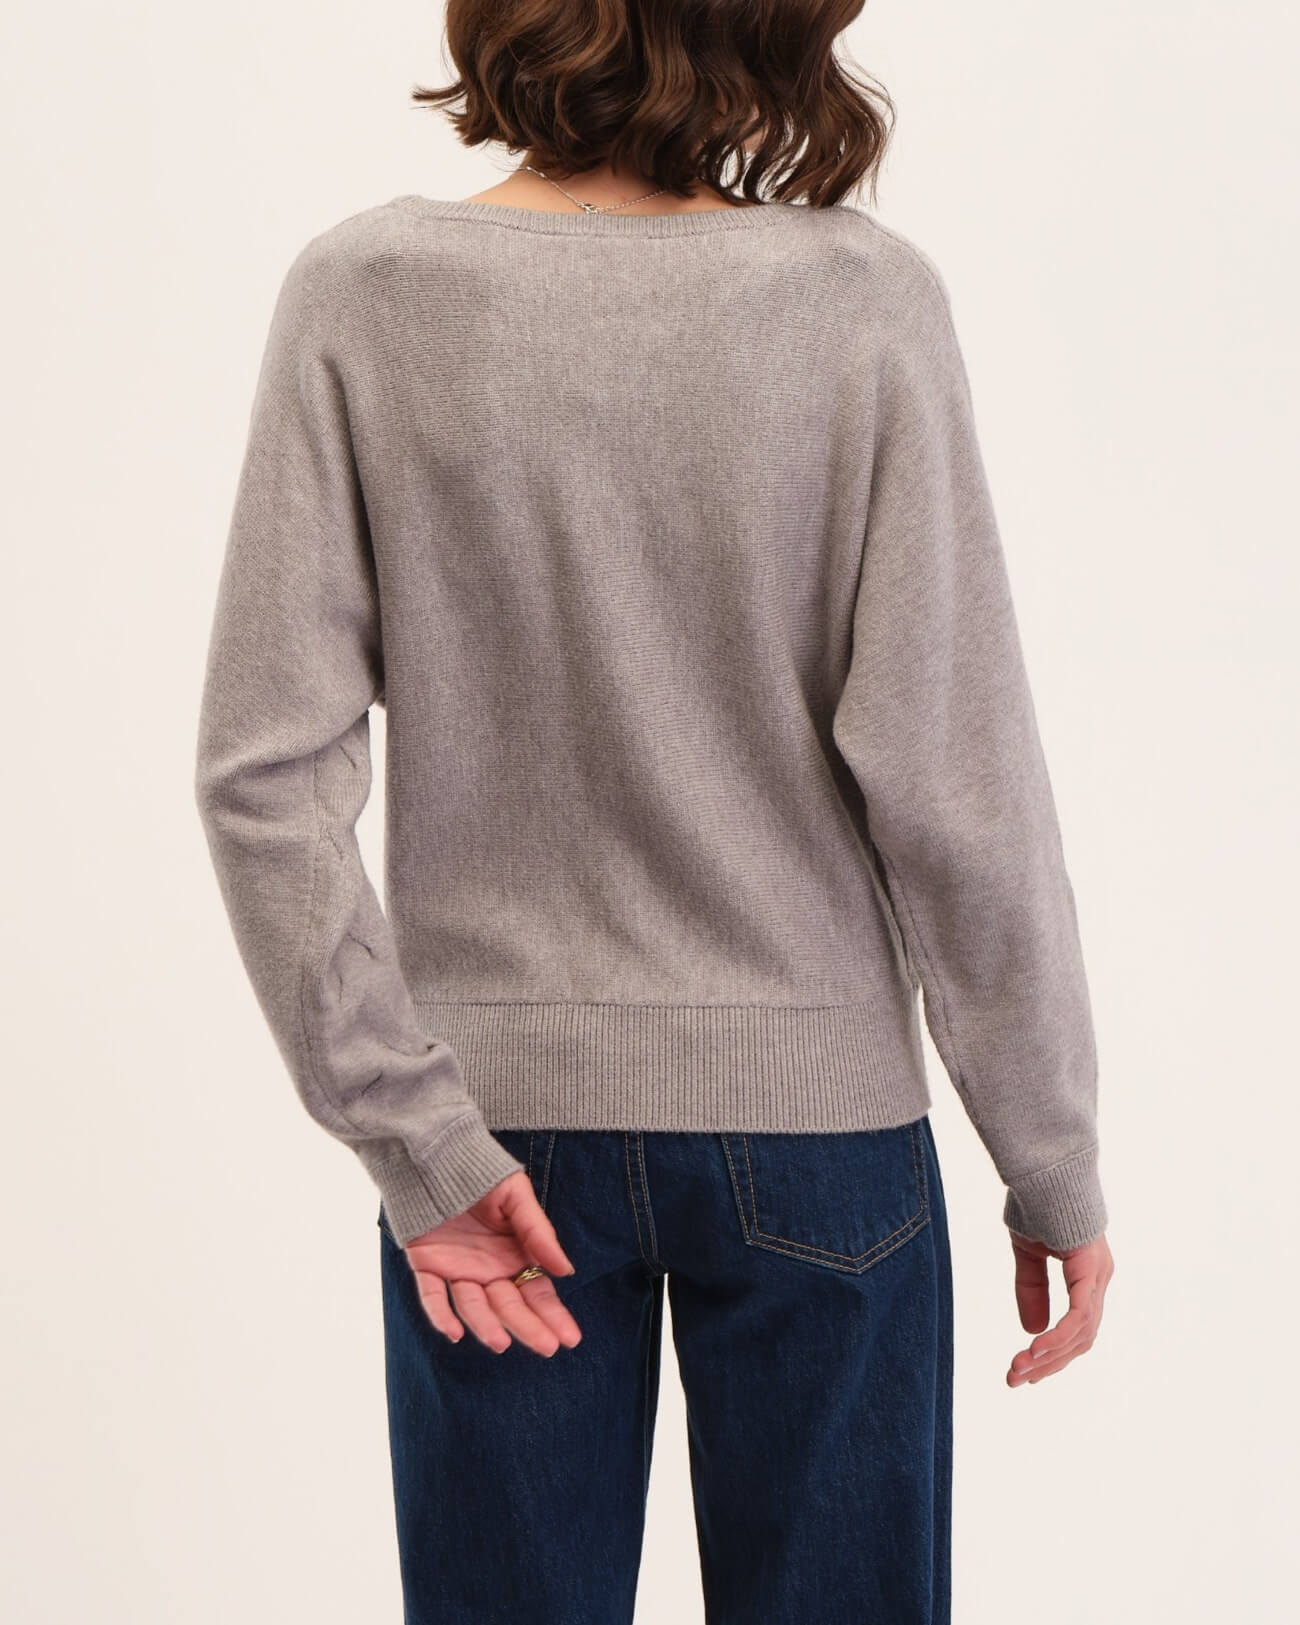 Shop Dolman Sleeve Novelty Stitch Pullover | Philosophy | JANE + MERCER